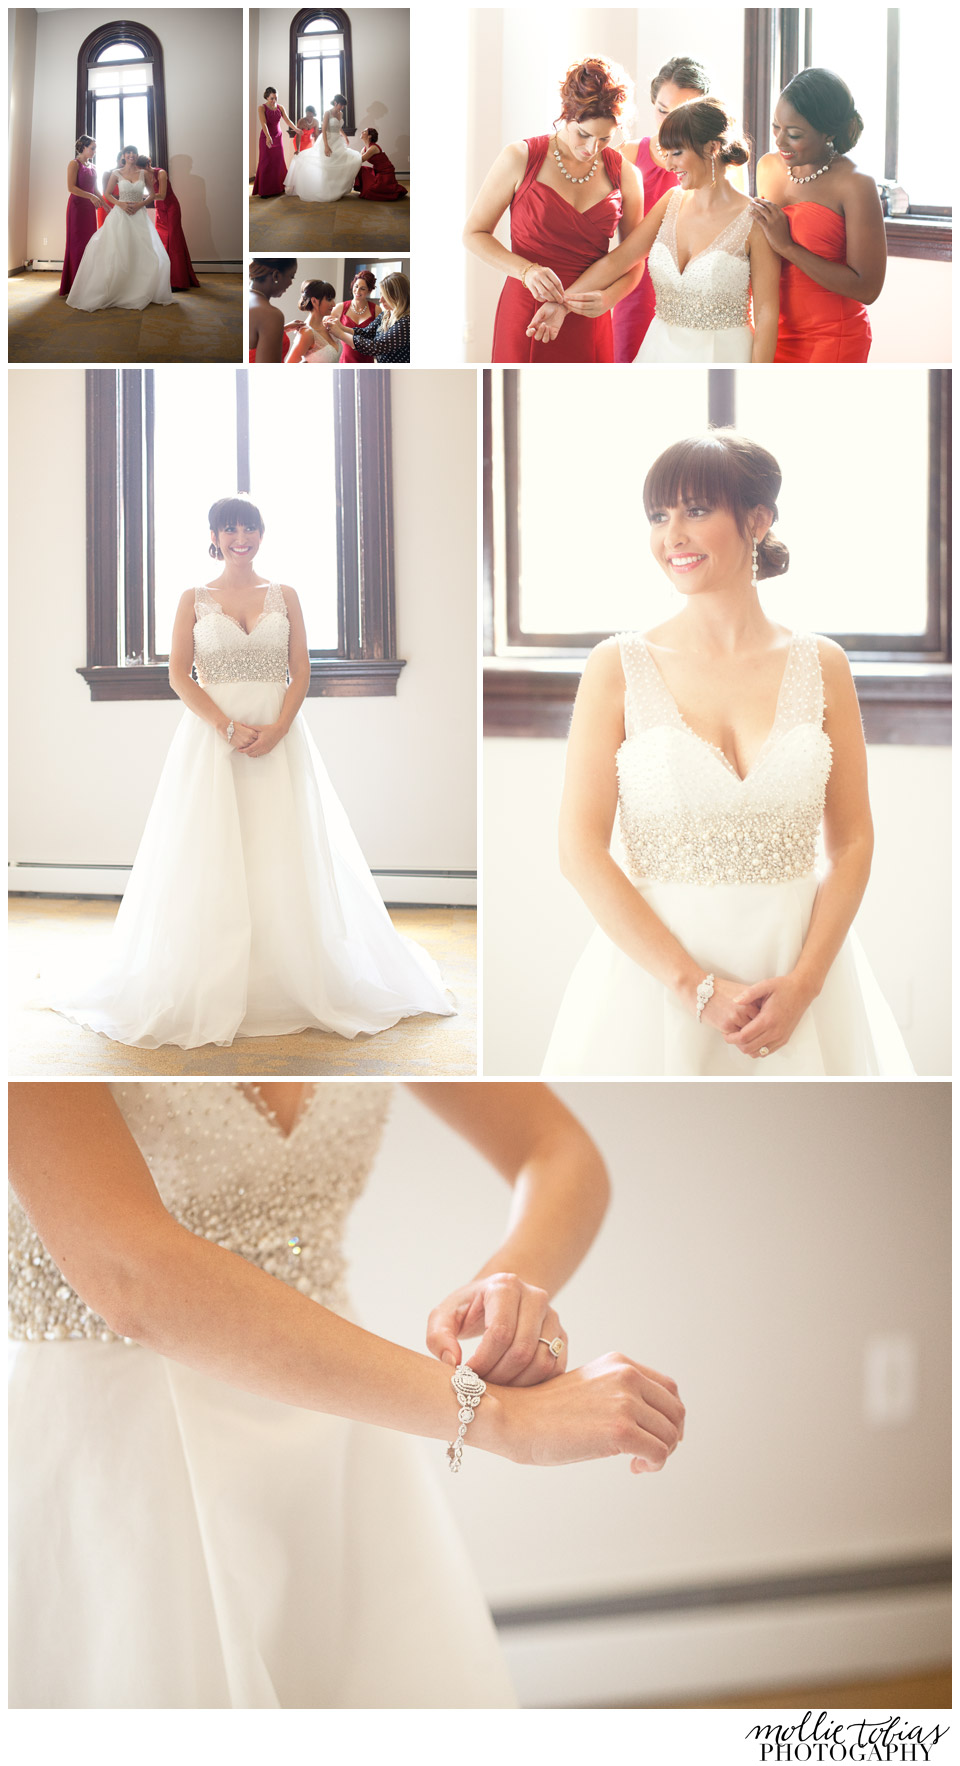 mollie-tobias-VA-MD-DC-wedding-photography-DC-Ladies-styled-shoot-bride-getting-ready